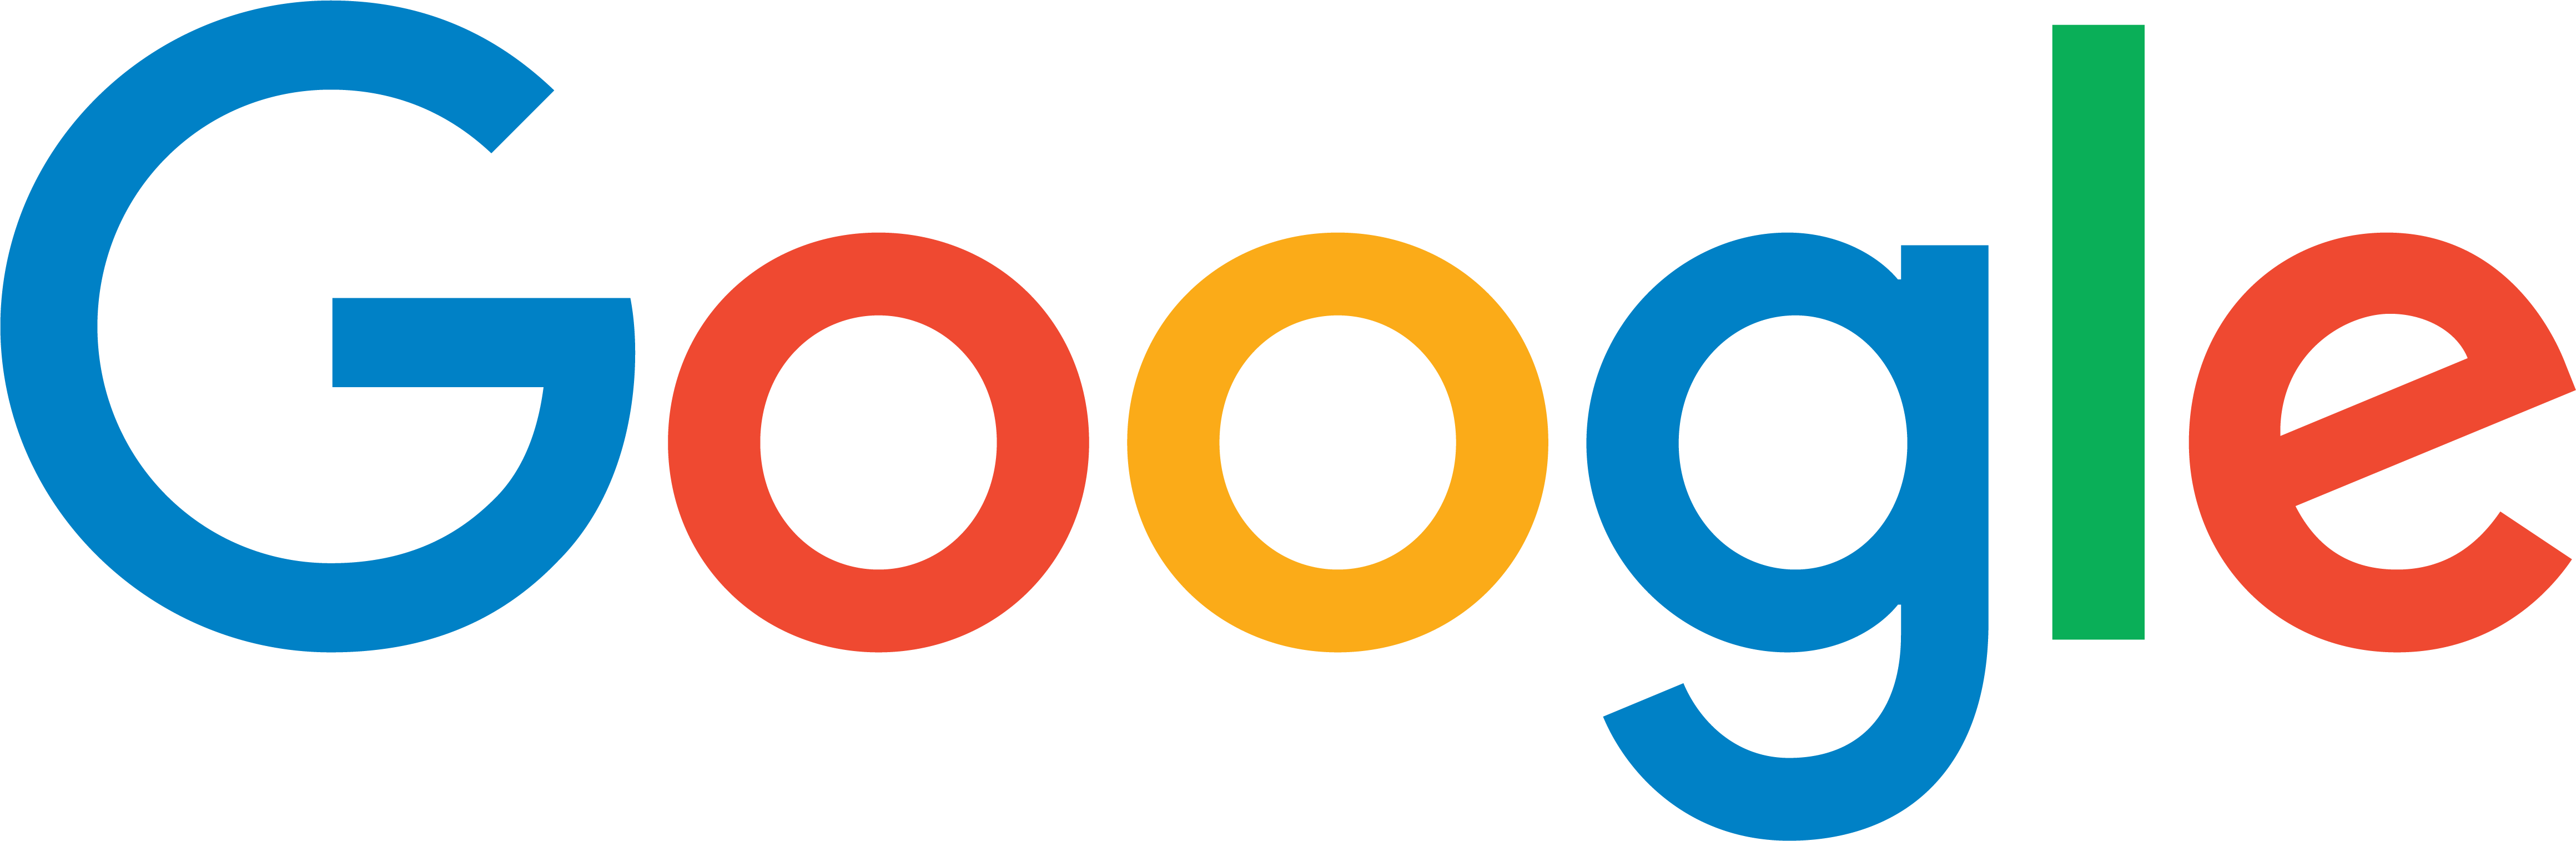 SGoogle logo